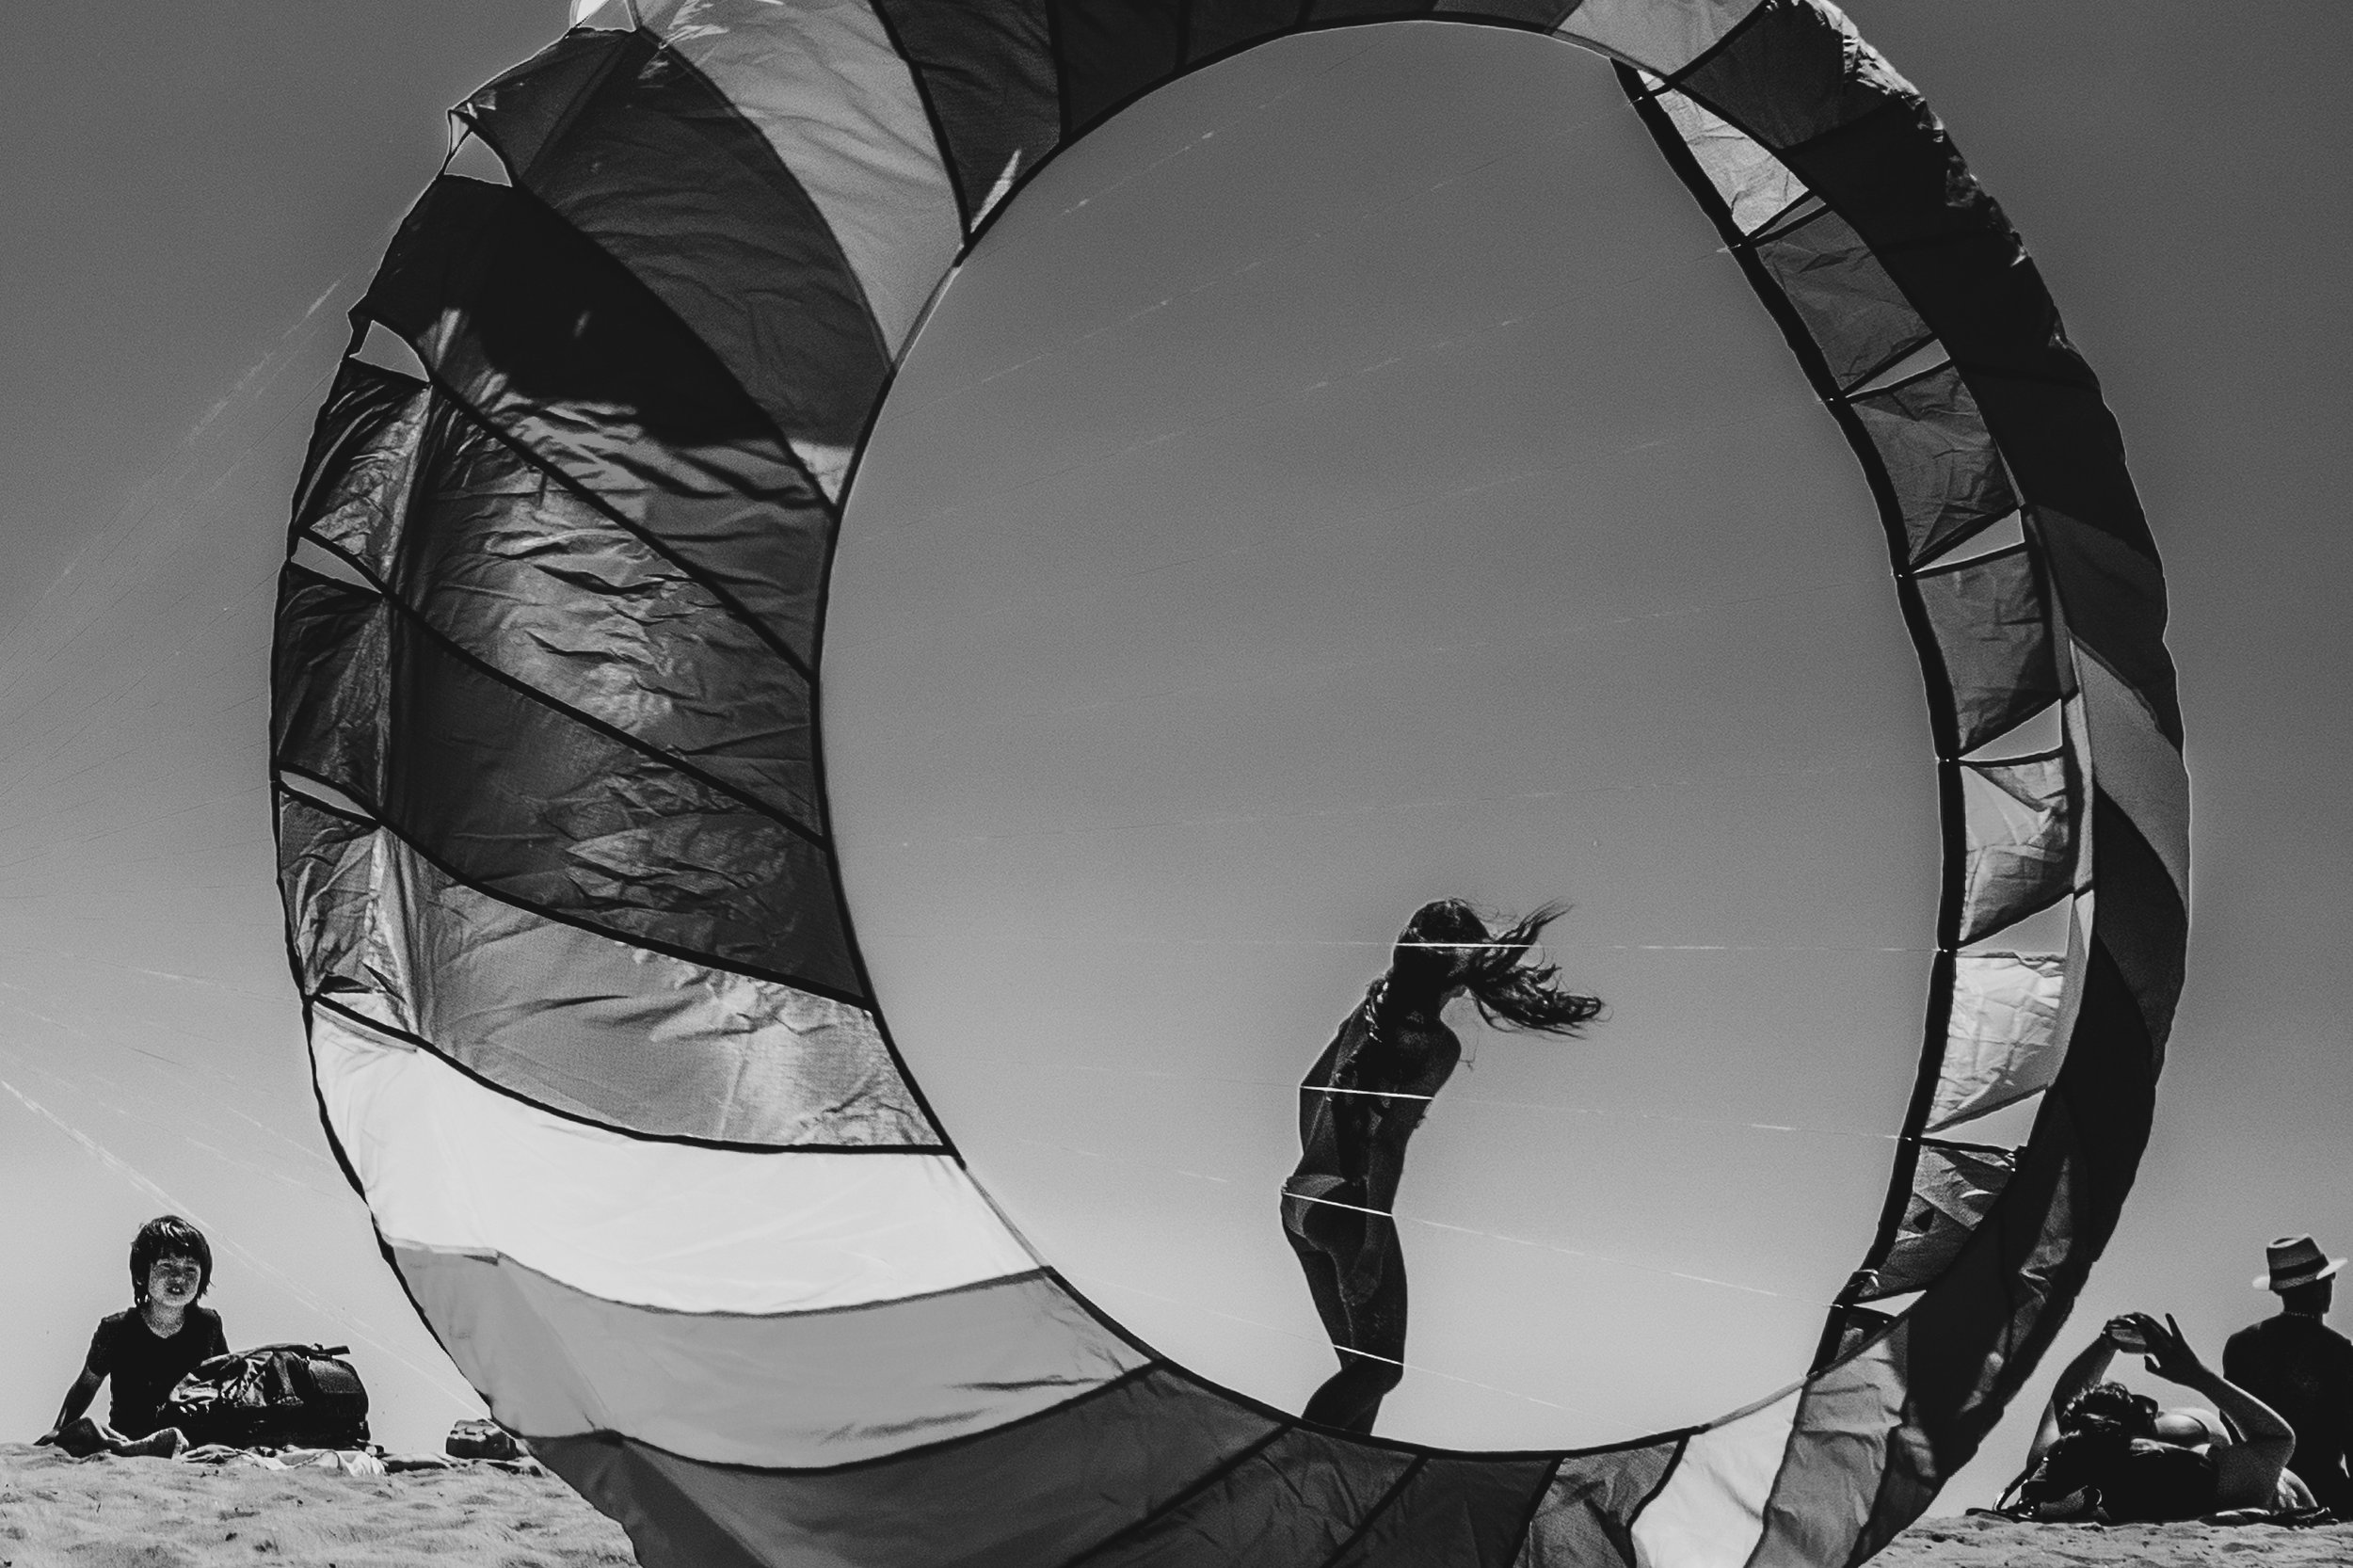 Woman inside a circular kite, Venice Beach